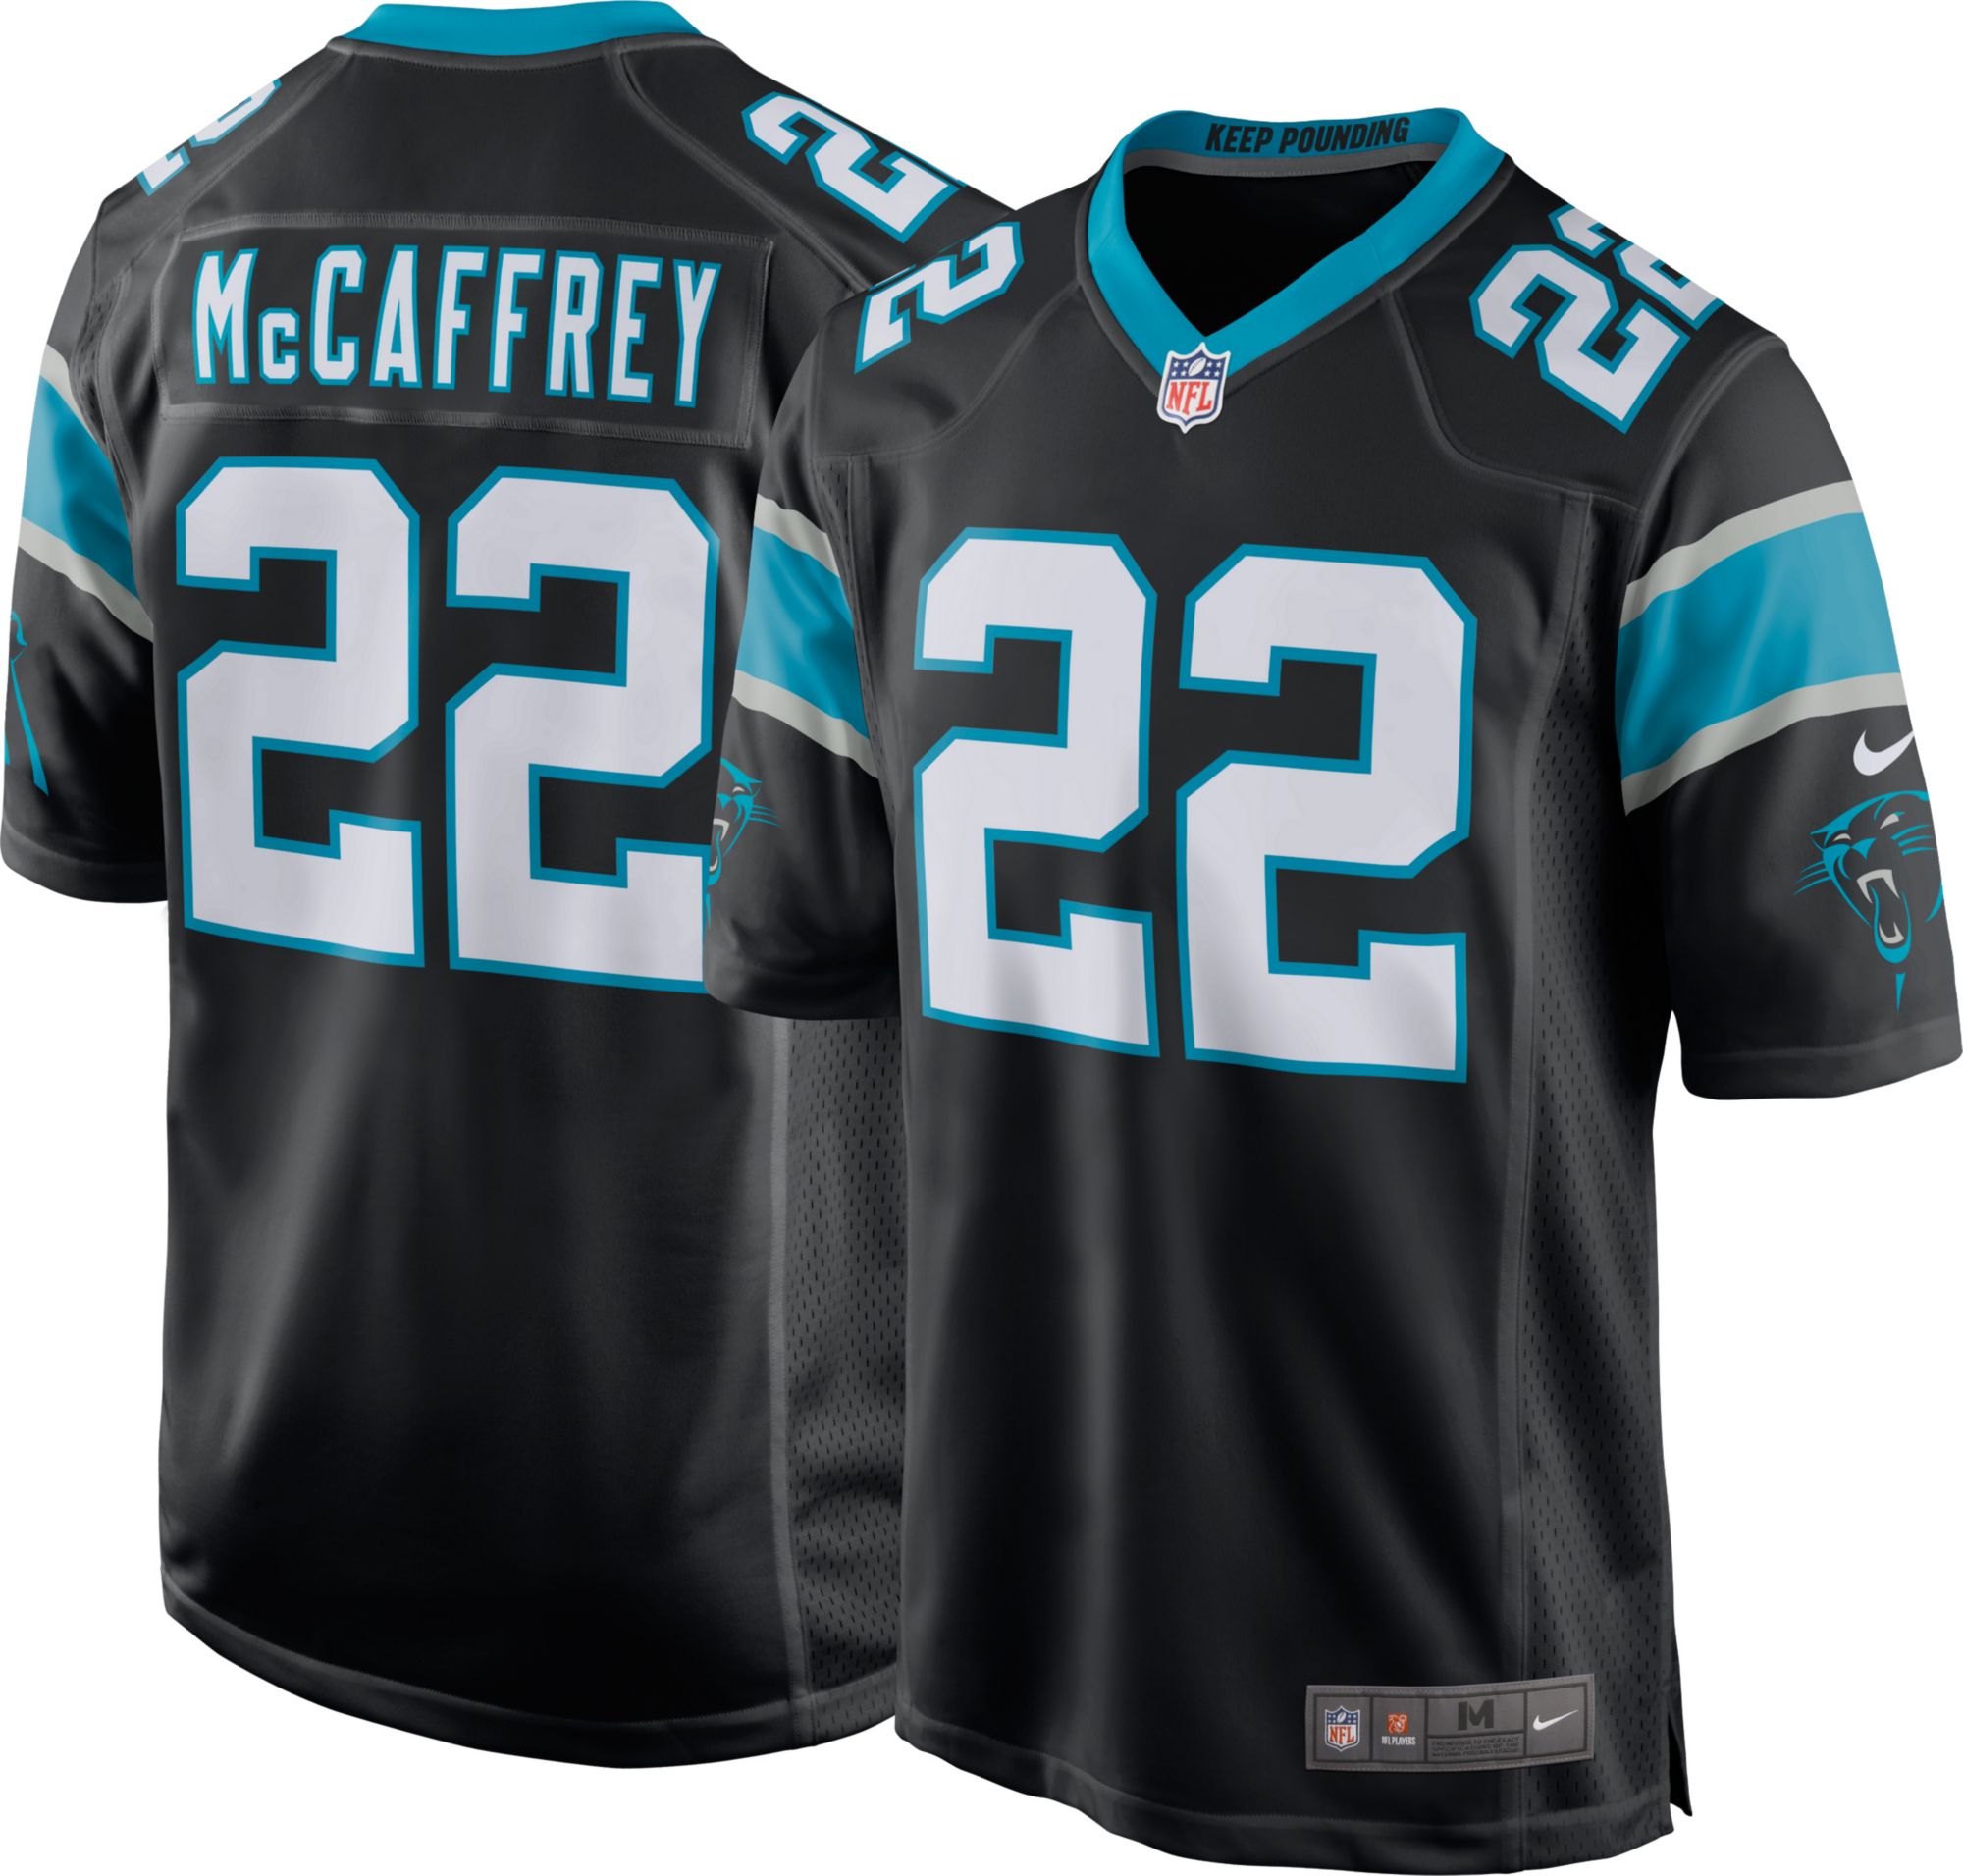 mccaffrey blue jersey